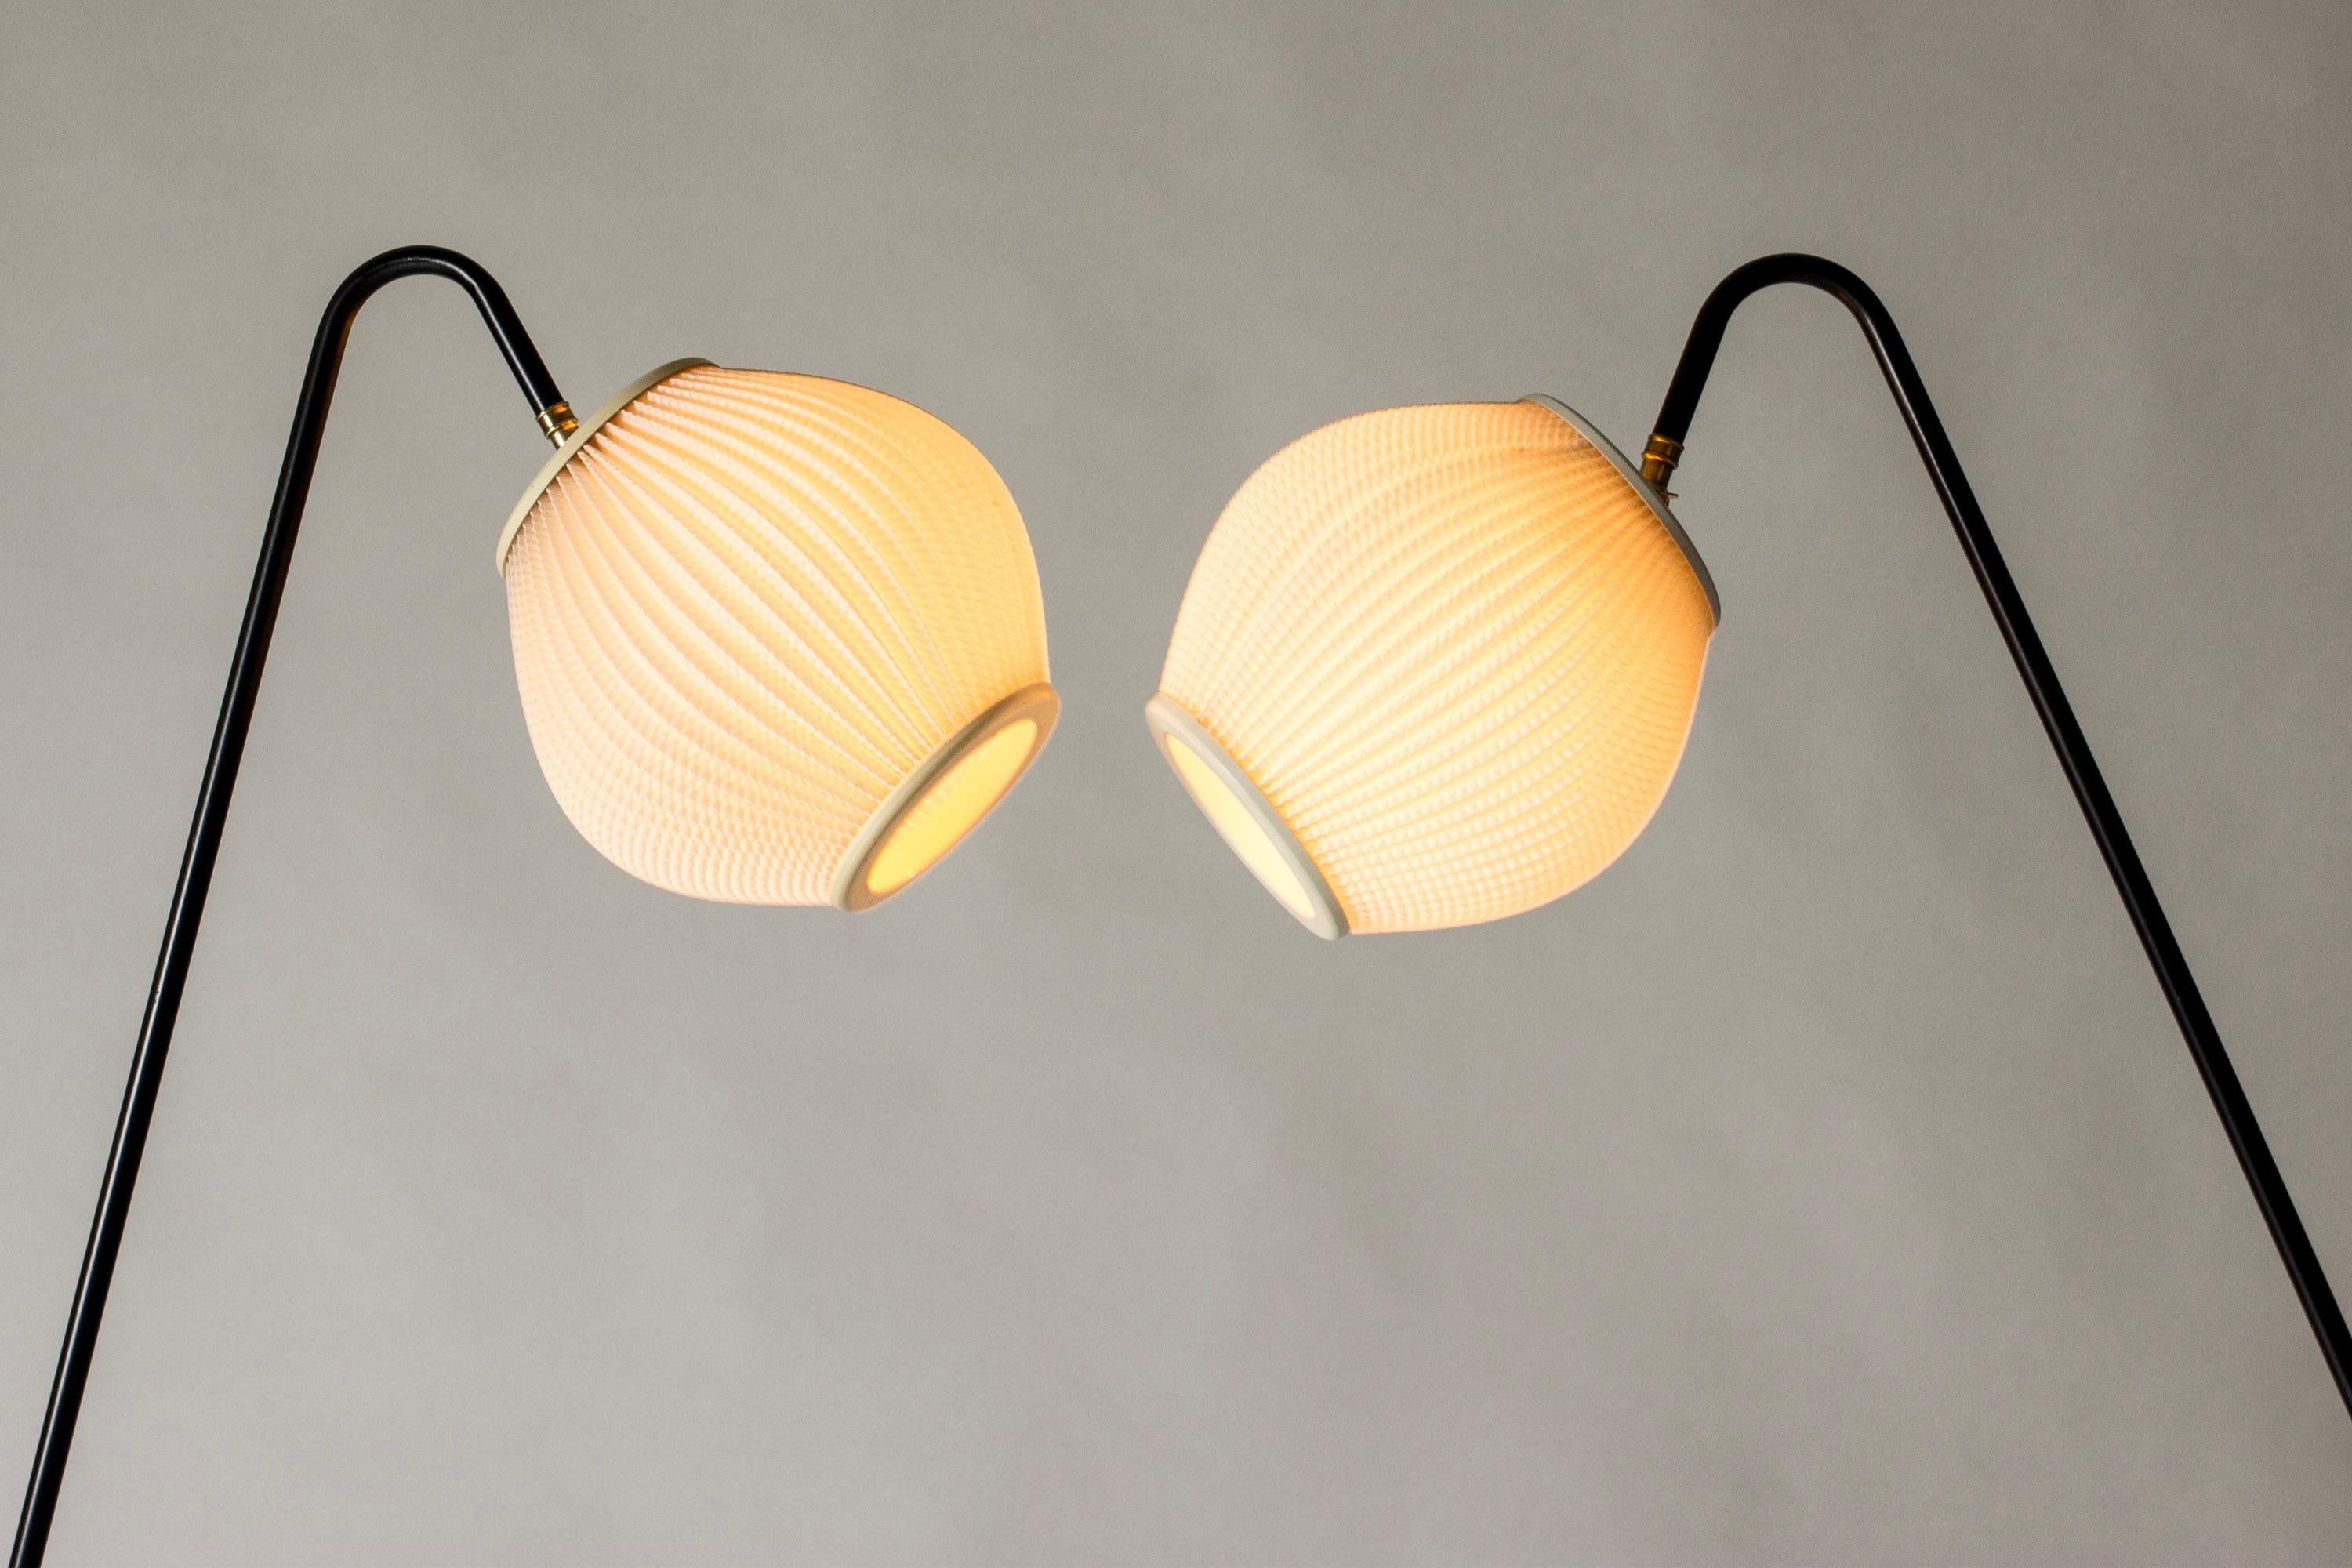 Pair of Modernist floor lamps by Svend Aage Holm Sørensen, Denmark, 1950s For Sale 2